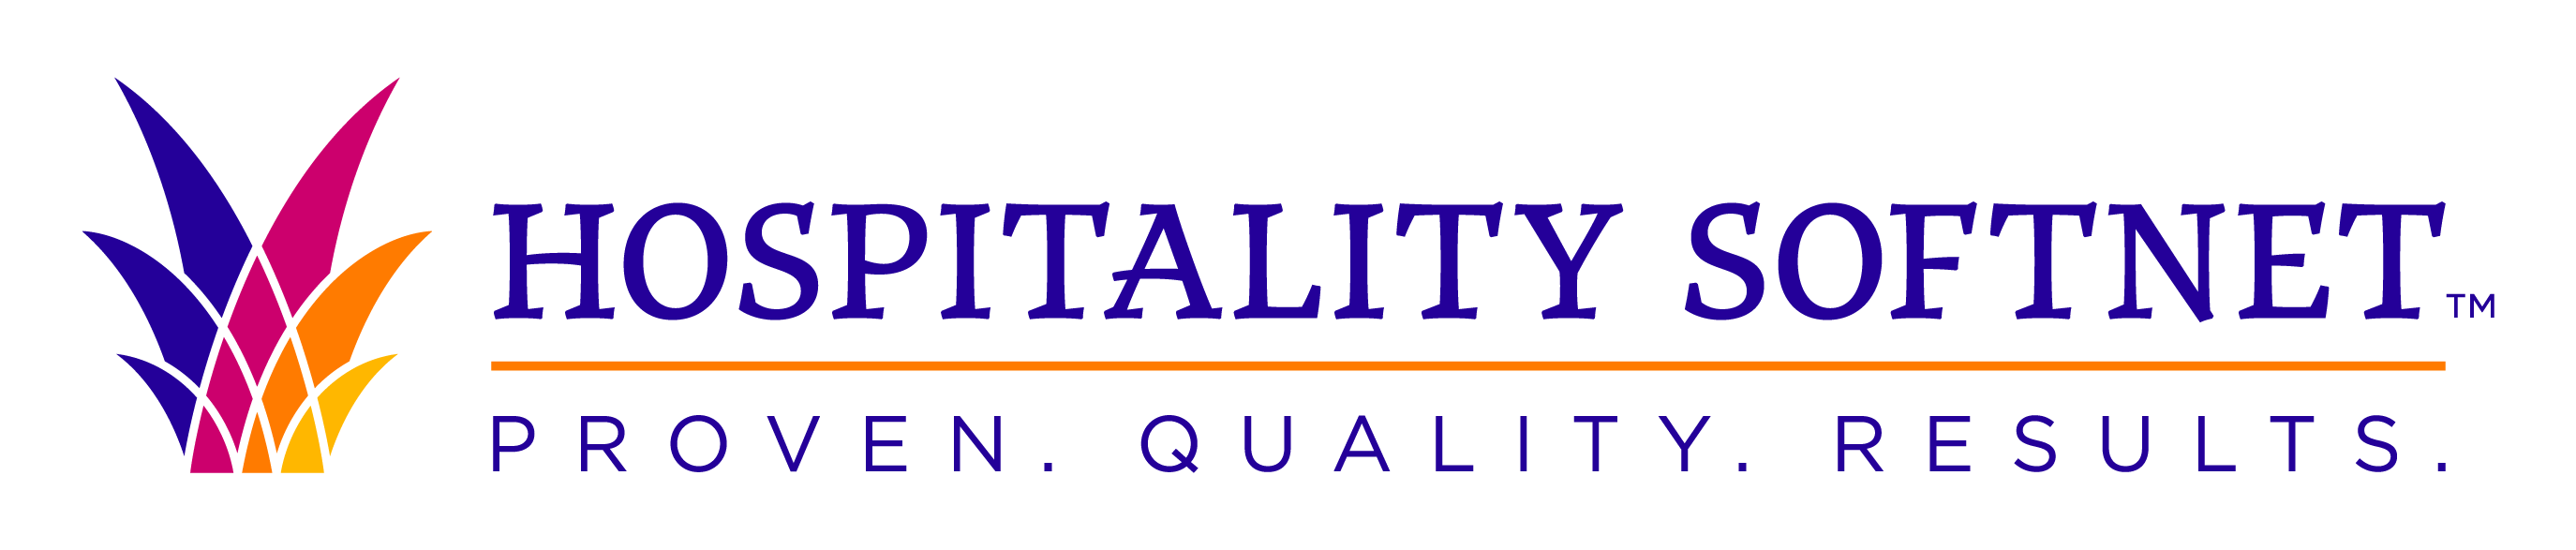 Logo for Hospitality Softnet